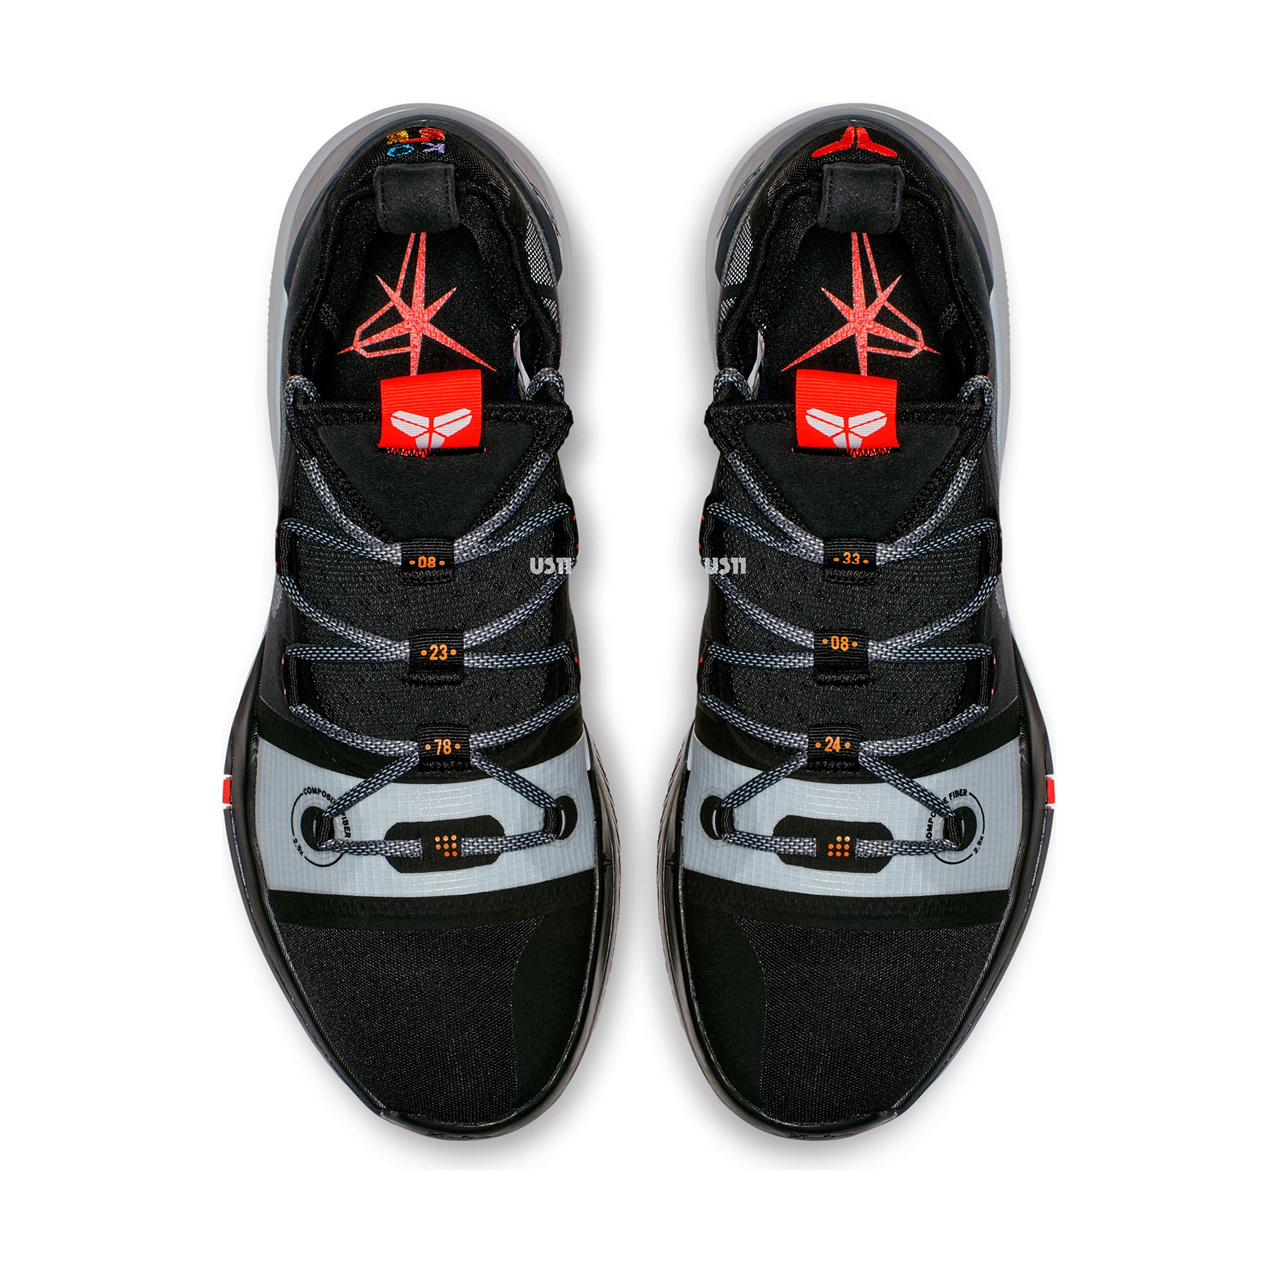 Nike-Kobe-AD-Exodus-Black-Red-2 